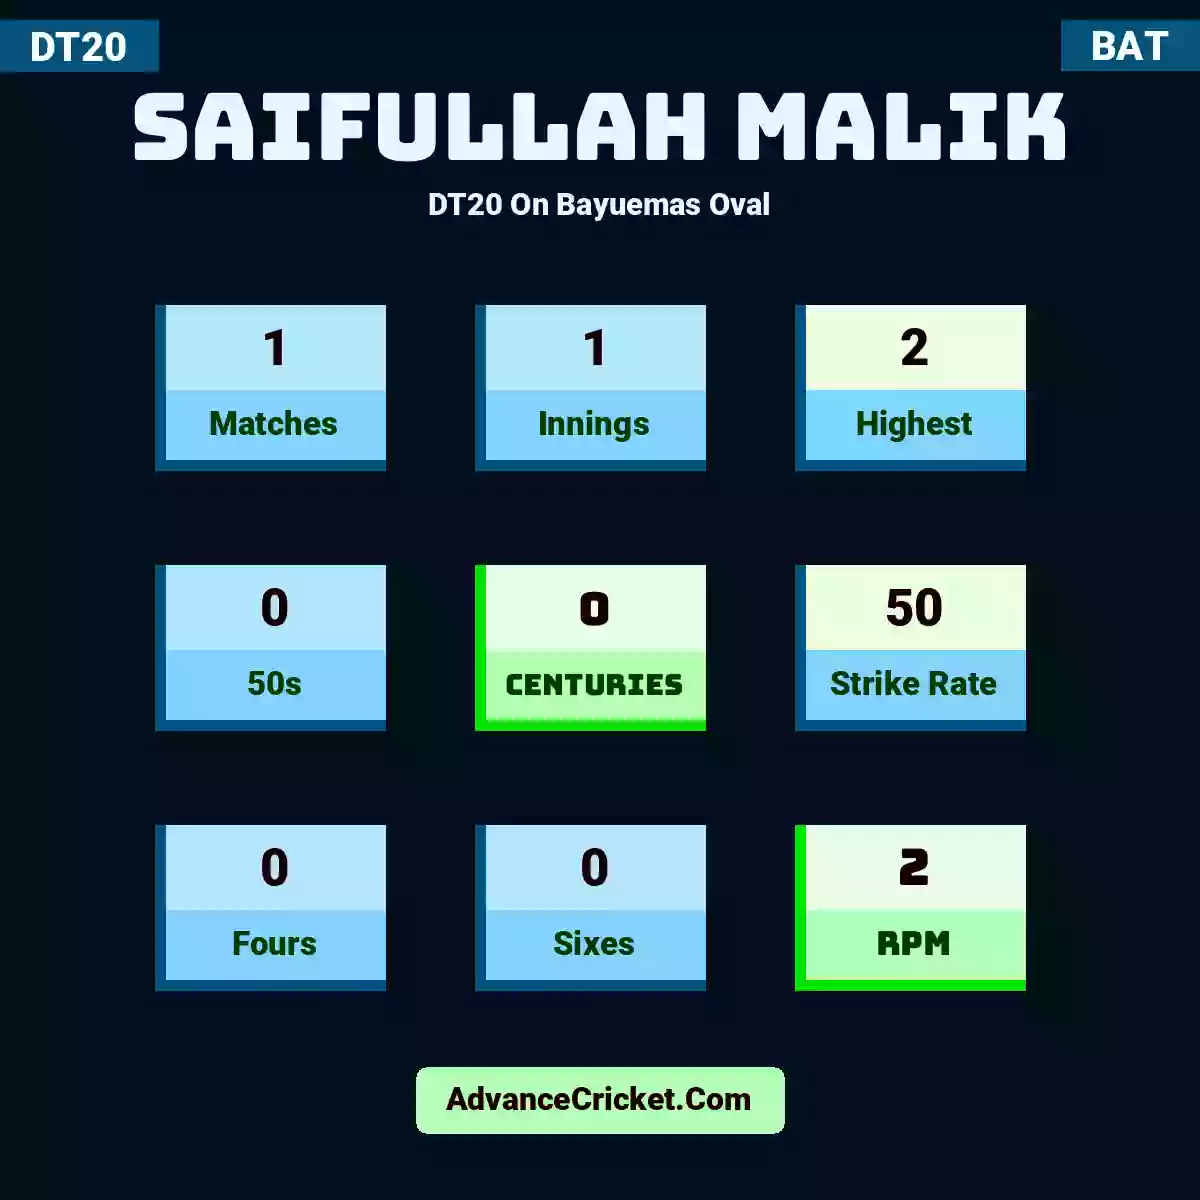 Saifullah Malik DT20  On Bayuemas Oval, Saifullah Malik played 1 matches, scored 2 runs as highest, 0 half-centuries, and 0 centuries, with a strike rate of 50. S.Malik hit 0 fours and 0 sixes, with an RPM of 2.